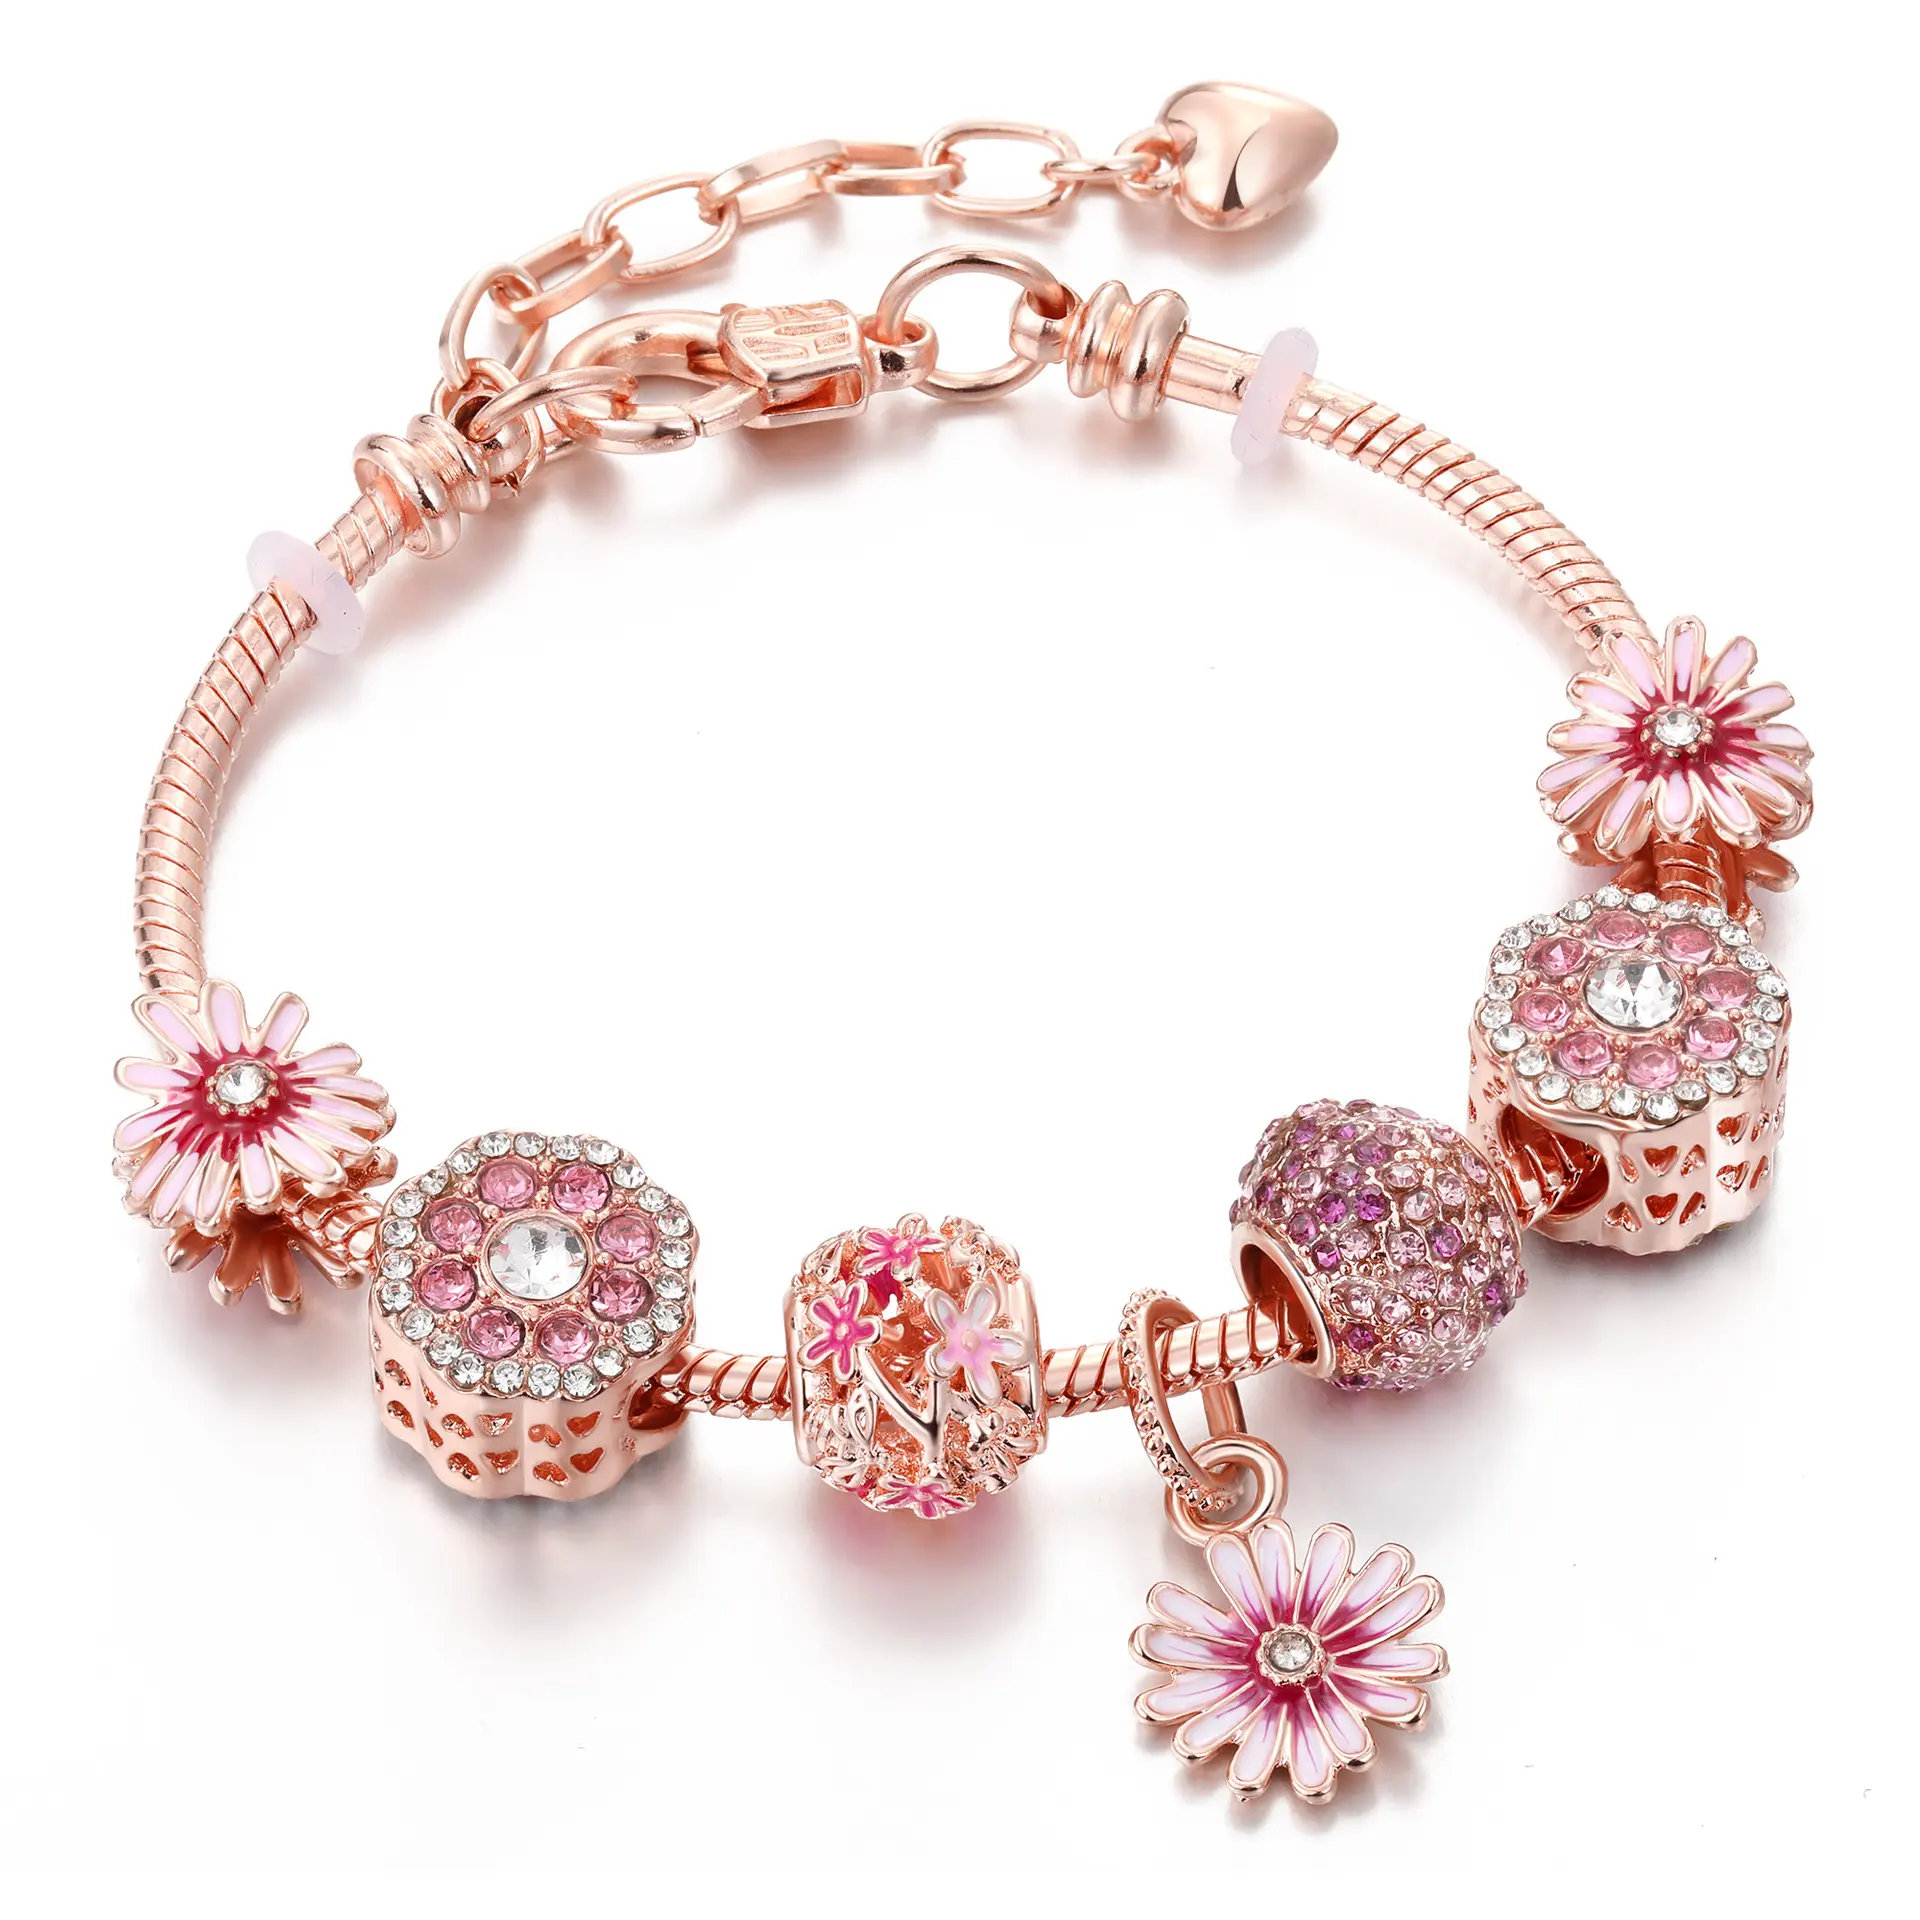 Fashion Jewelry Bracelets handmade zinc alloy Bead Bracelet Charm bracelets